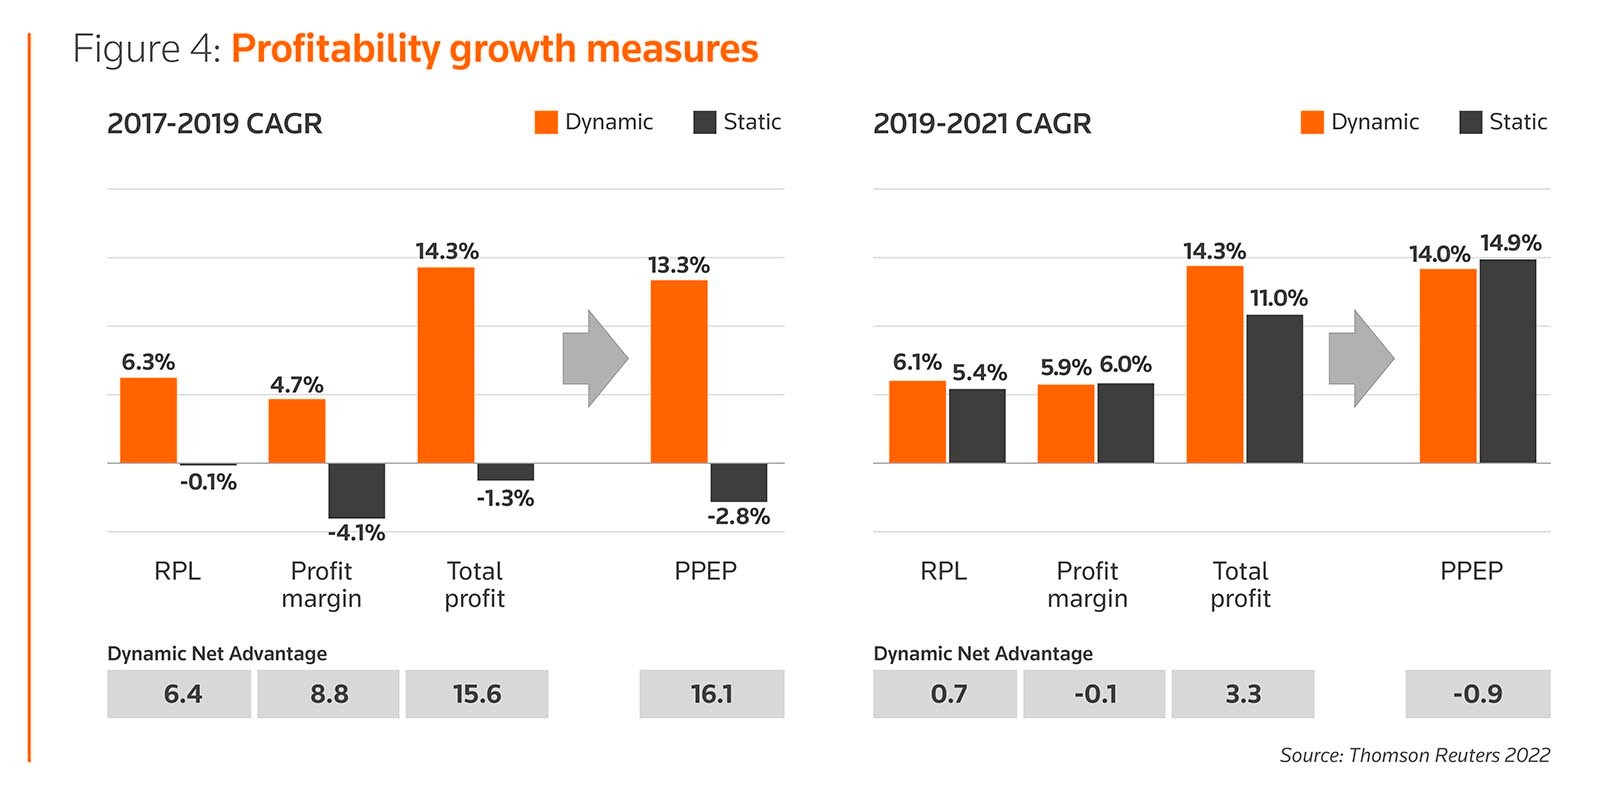 Figure 4: Profitability growth measures 